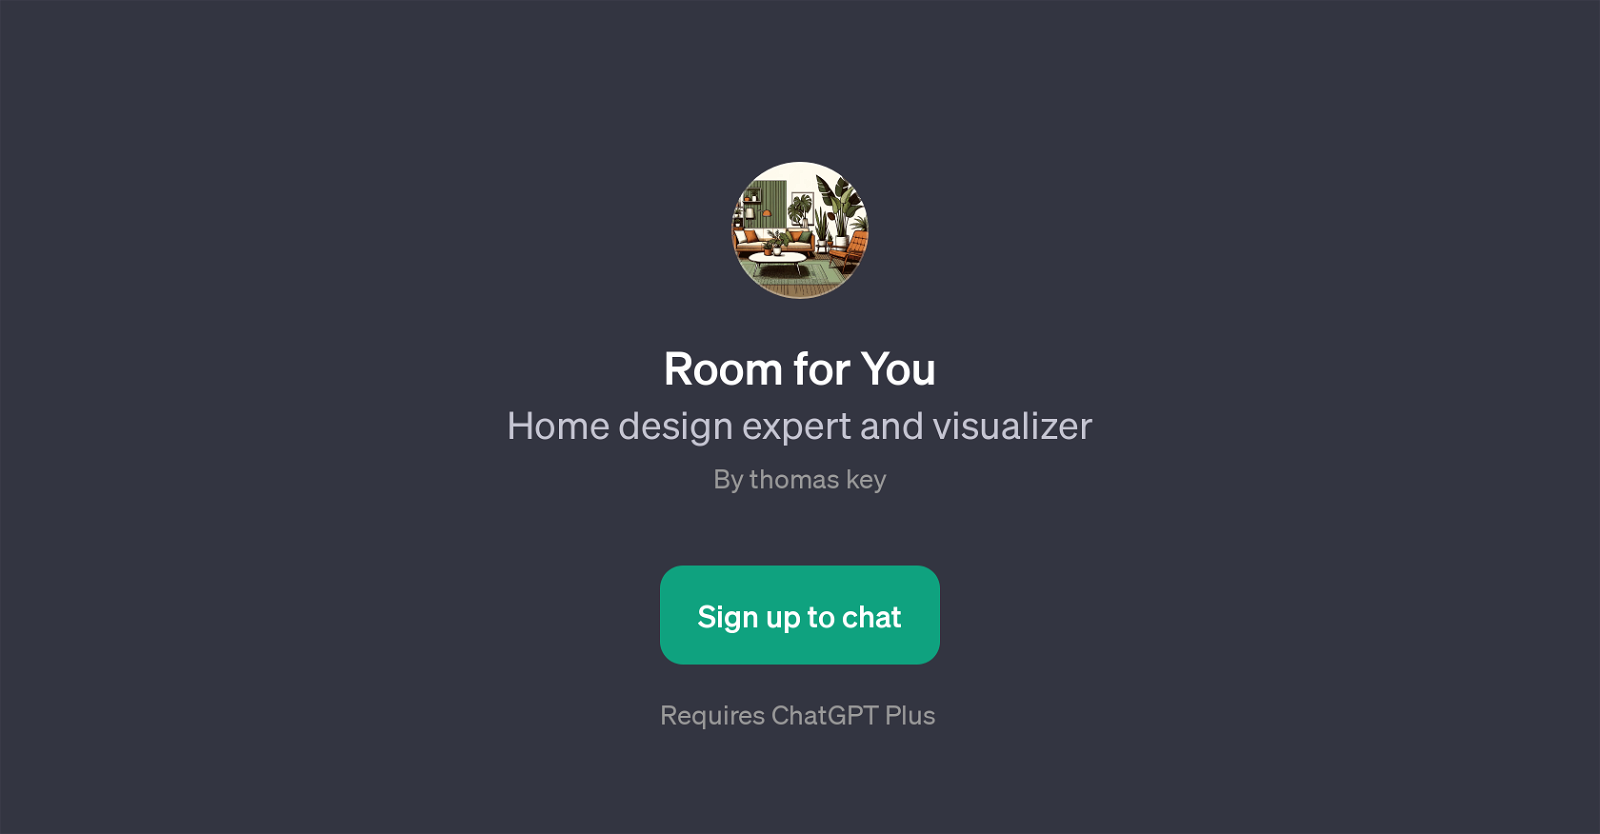 Room for You website